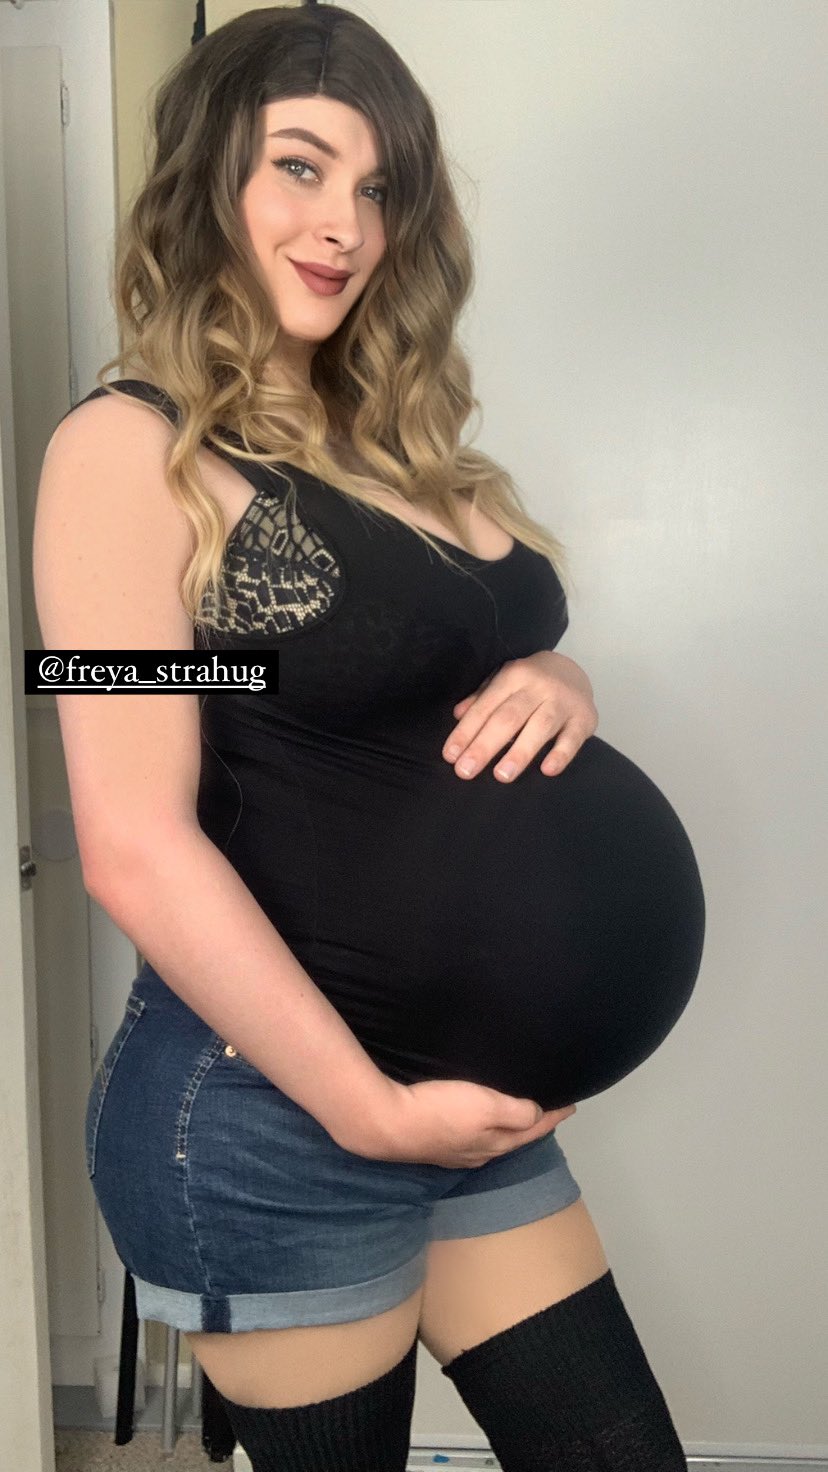 FreyaStrahug on X: Leather Pants ✓ no bra ✓ crop top ✓ #pregnant  #pregnantbelly #leatherpants #busty #pregnancy #fakepregnancy   / X